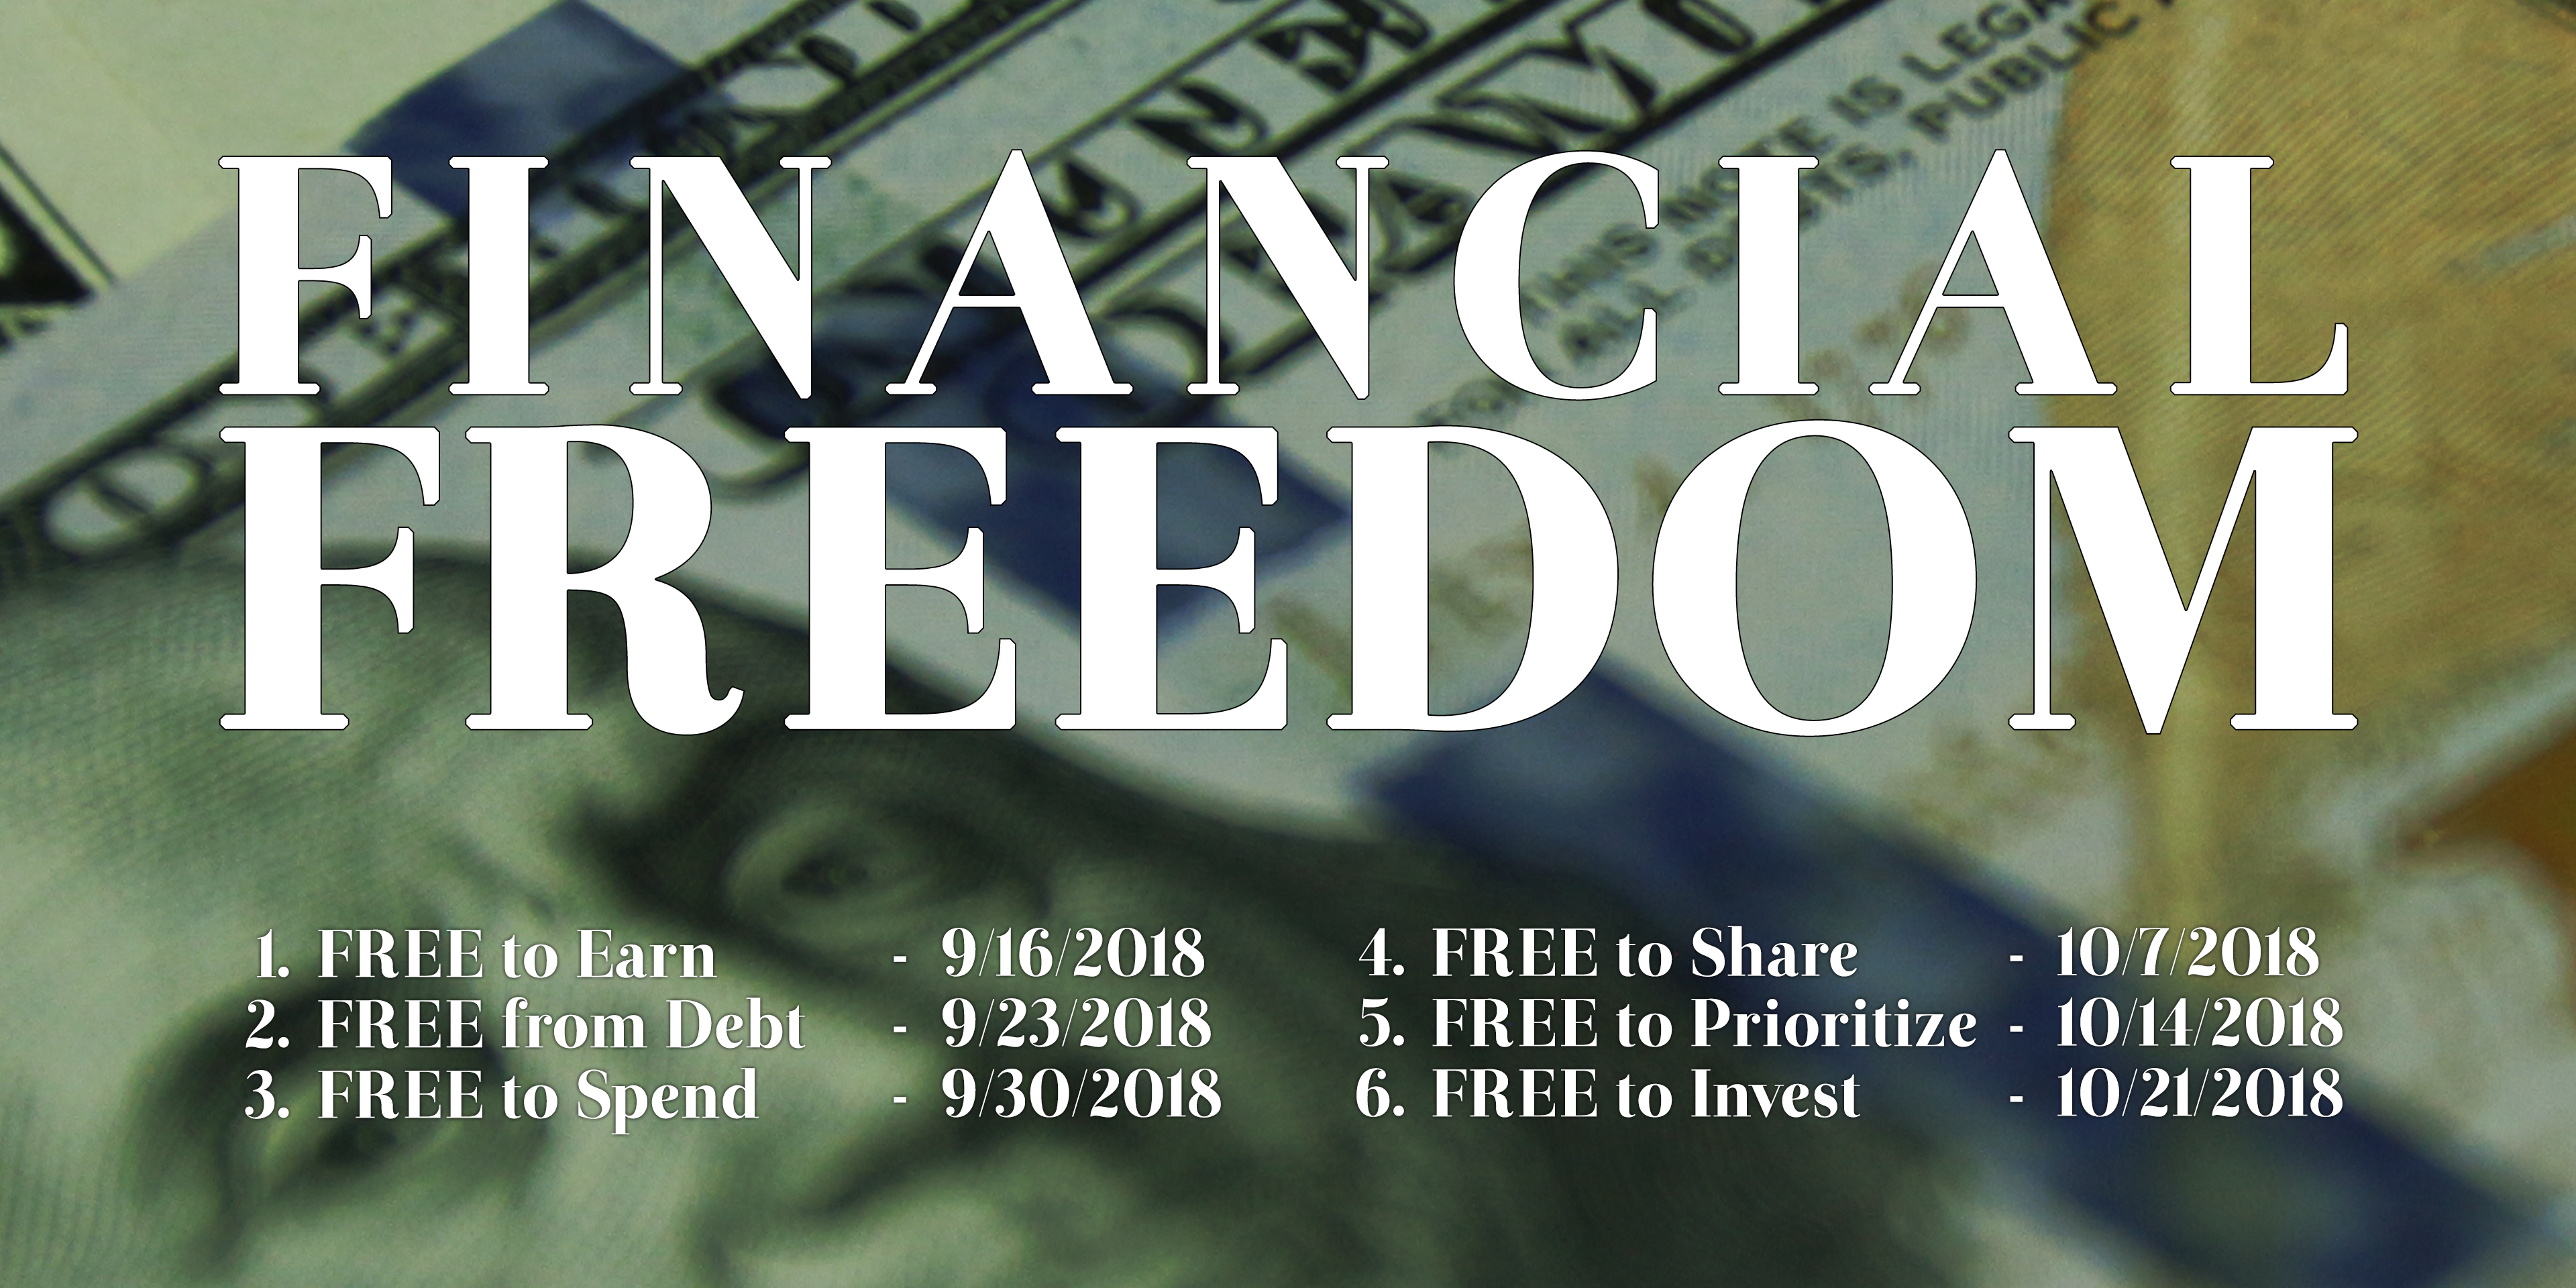 FinancialFreedom_Article